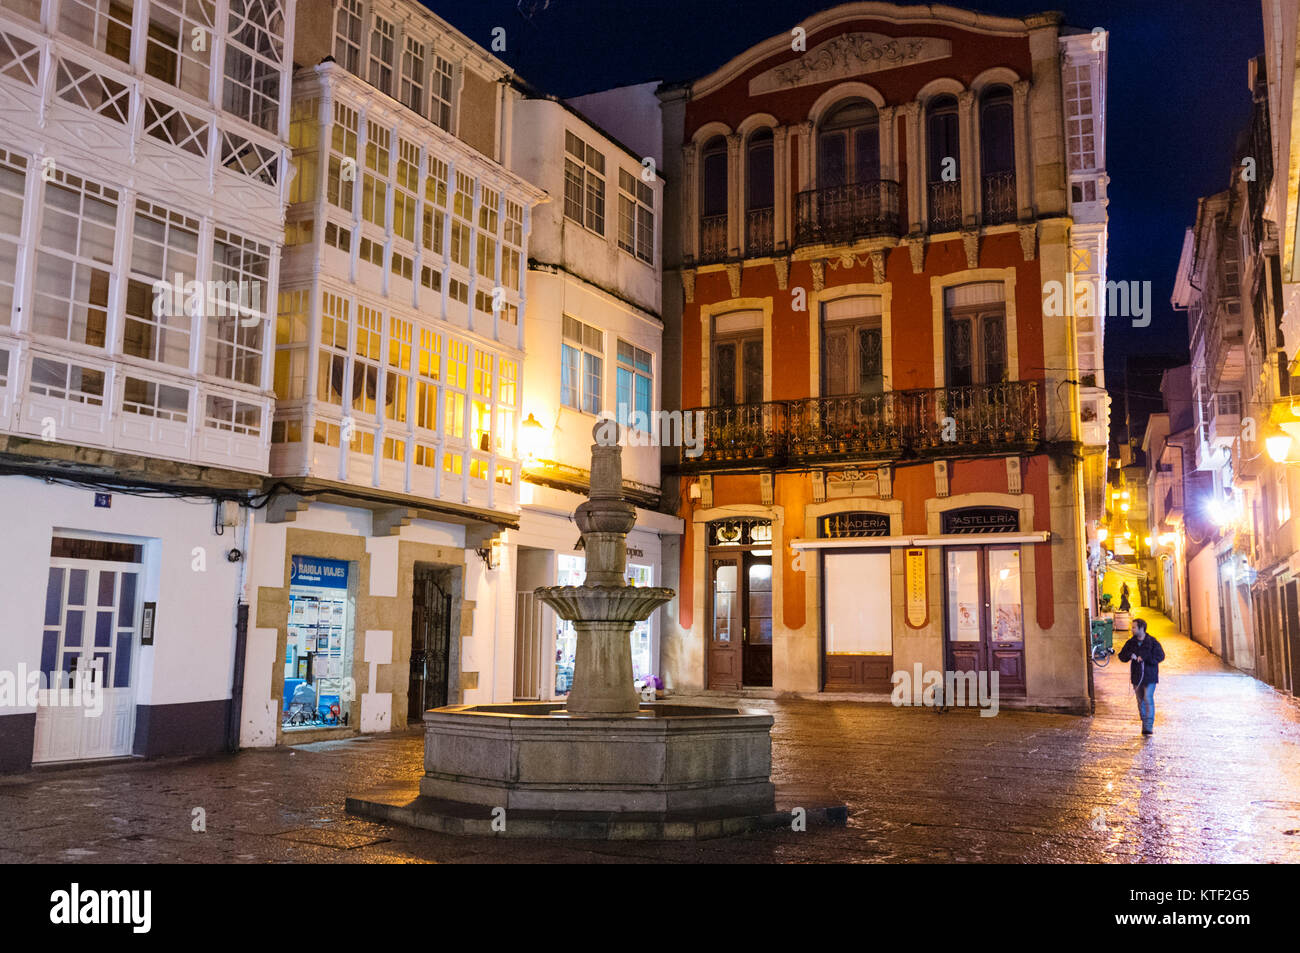 Fonte Nova square at night with traditional Galician architecture. Viveiro, Lugo province, Galicia, Spain, Europe Stock Photo